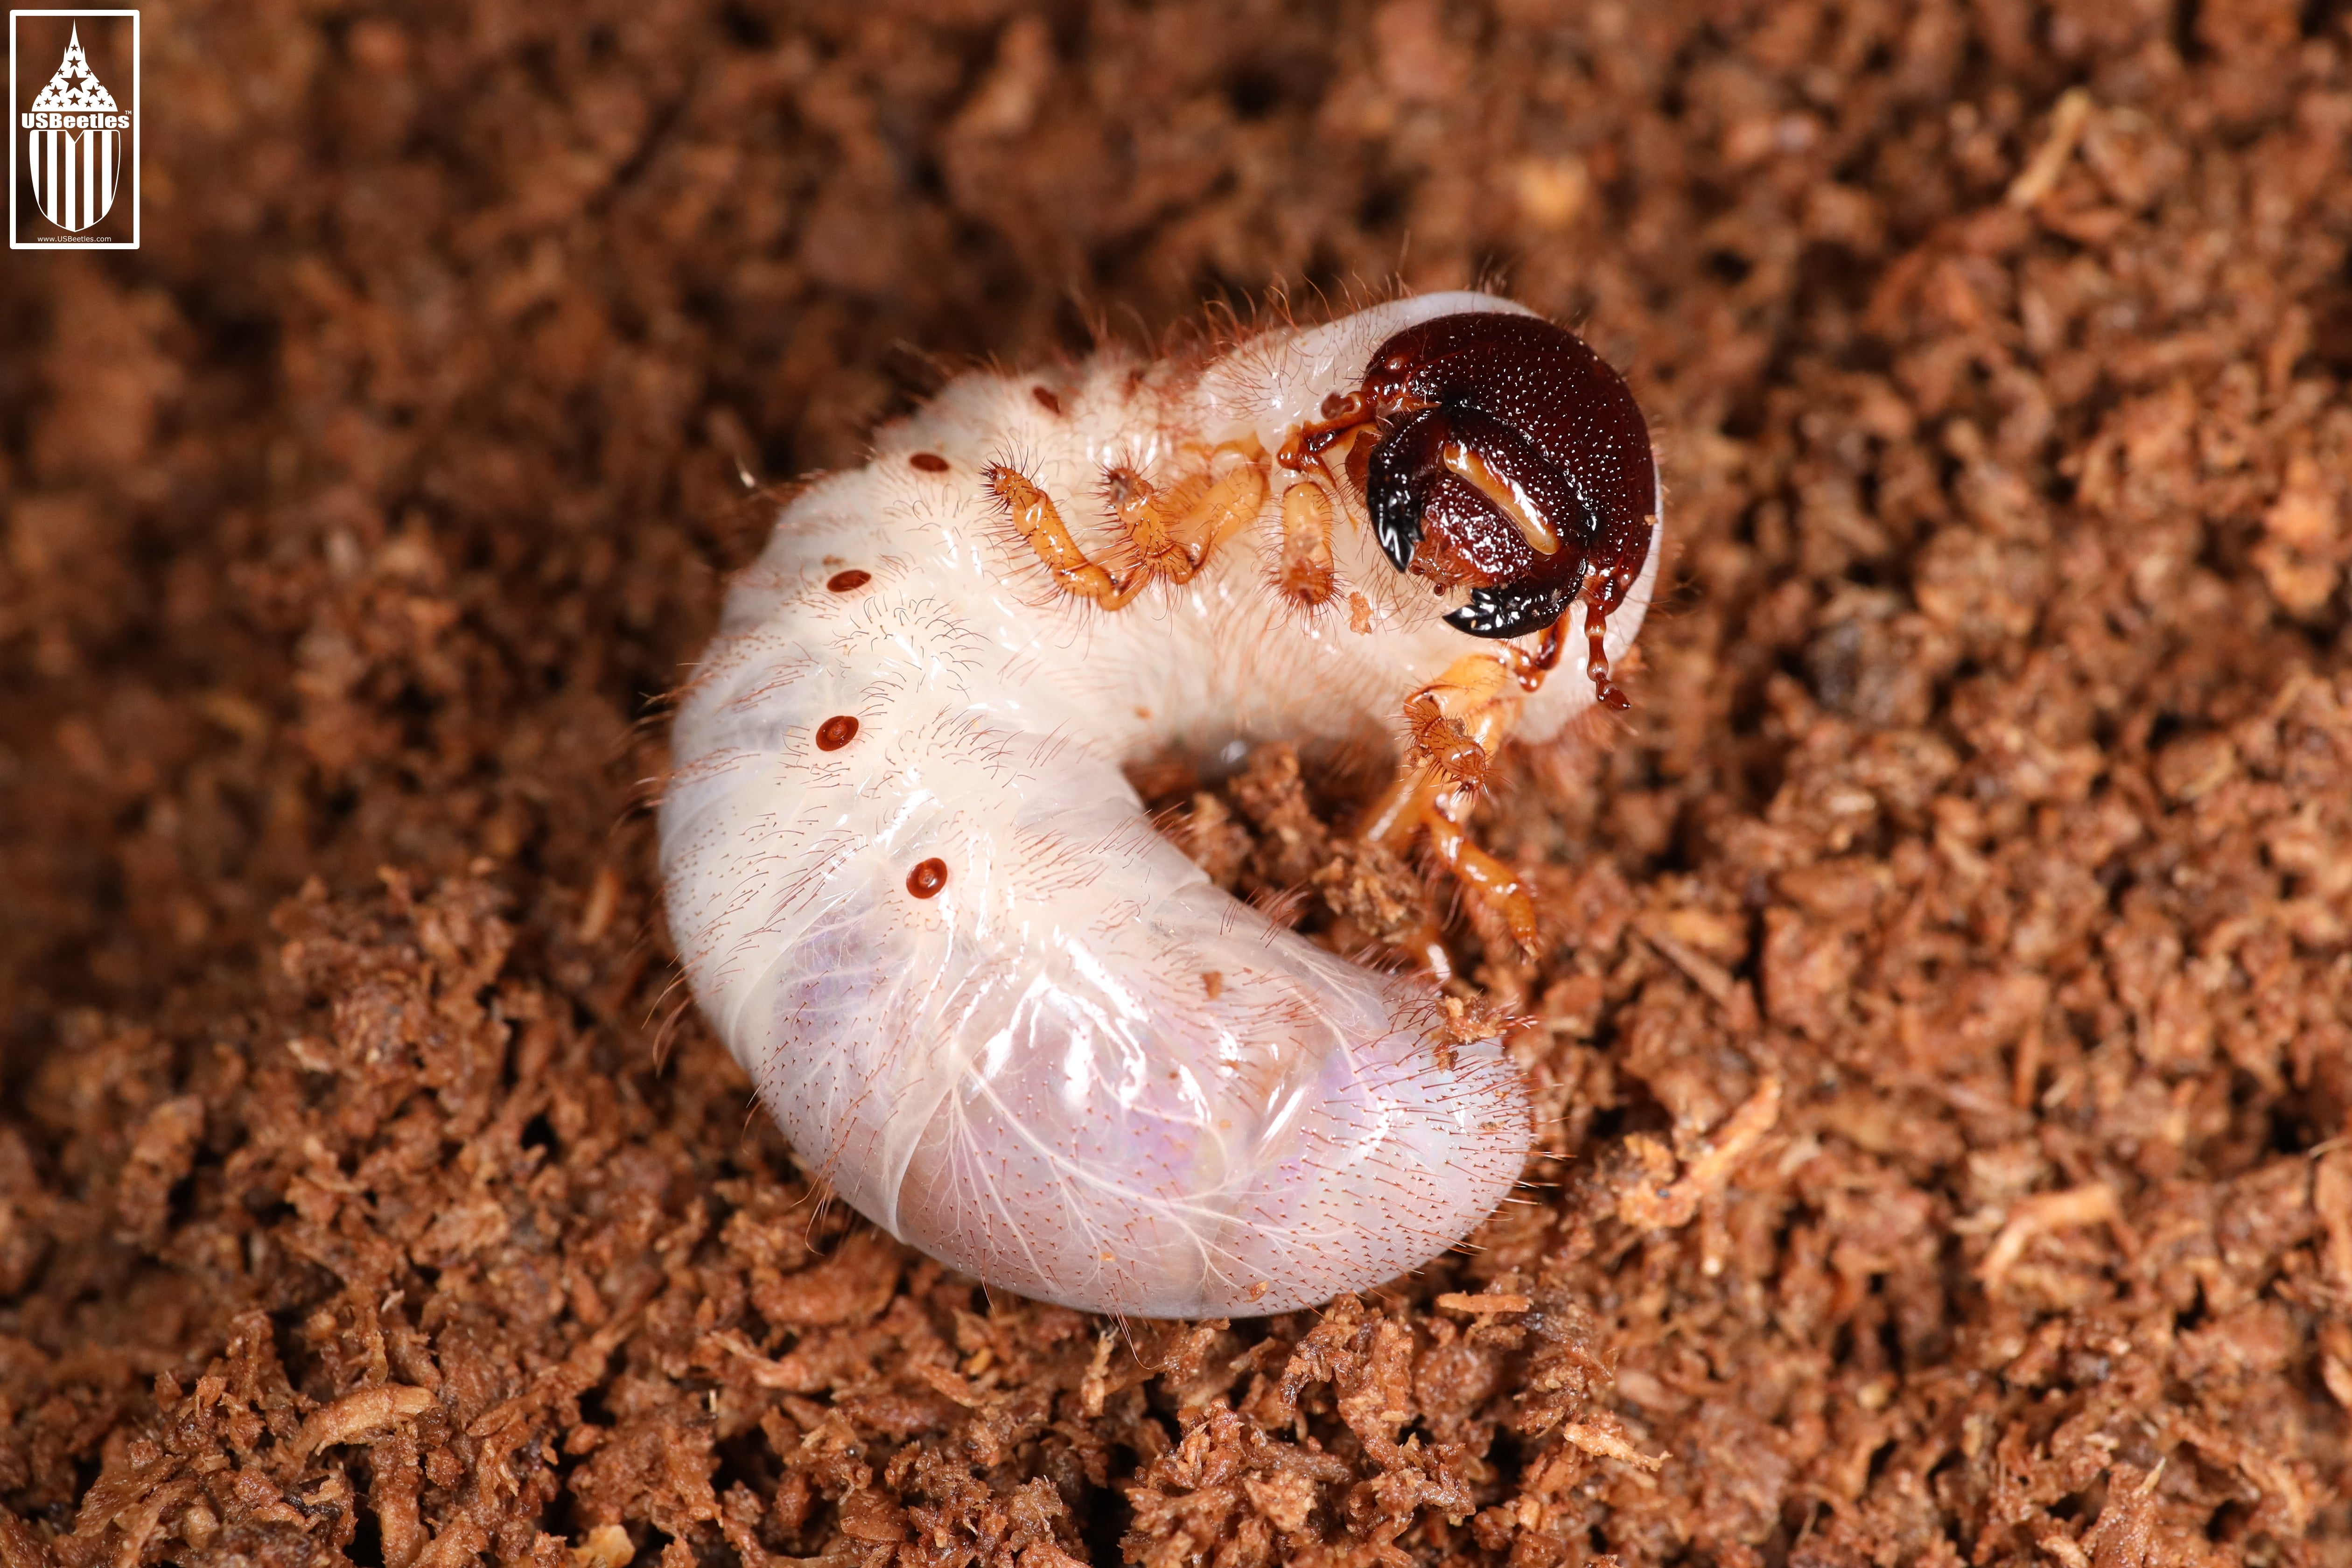 hercules beetle larva